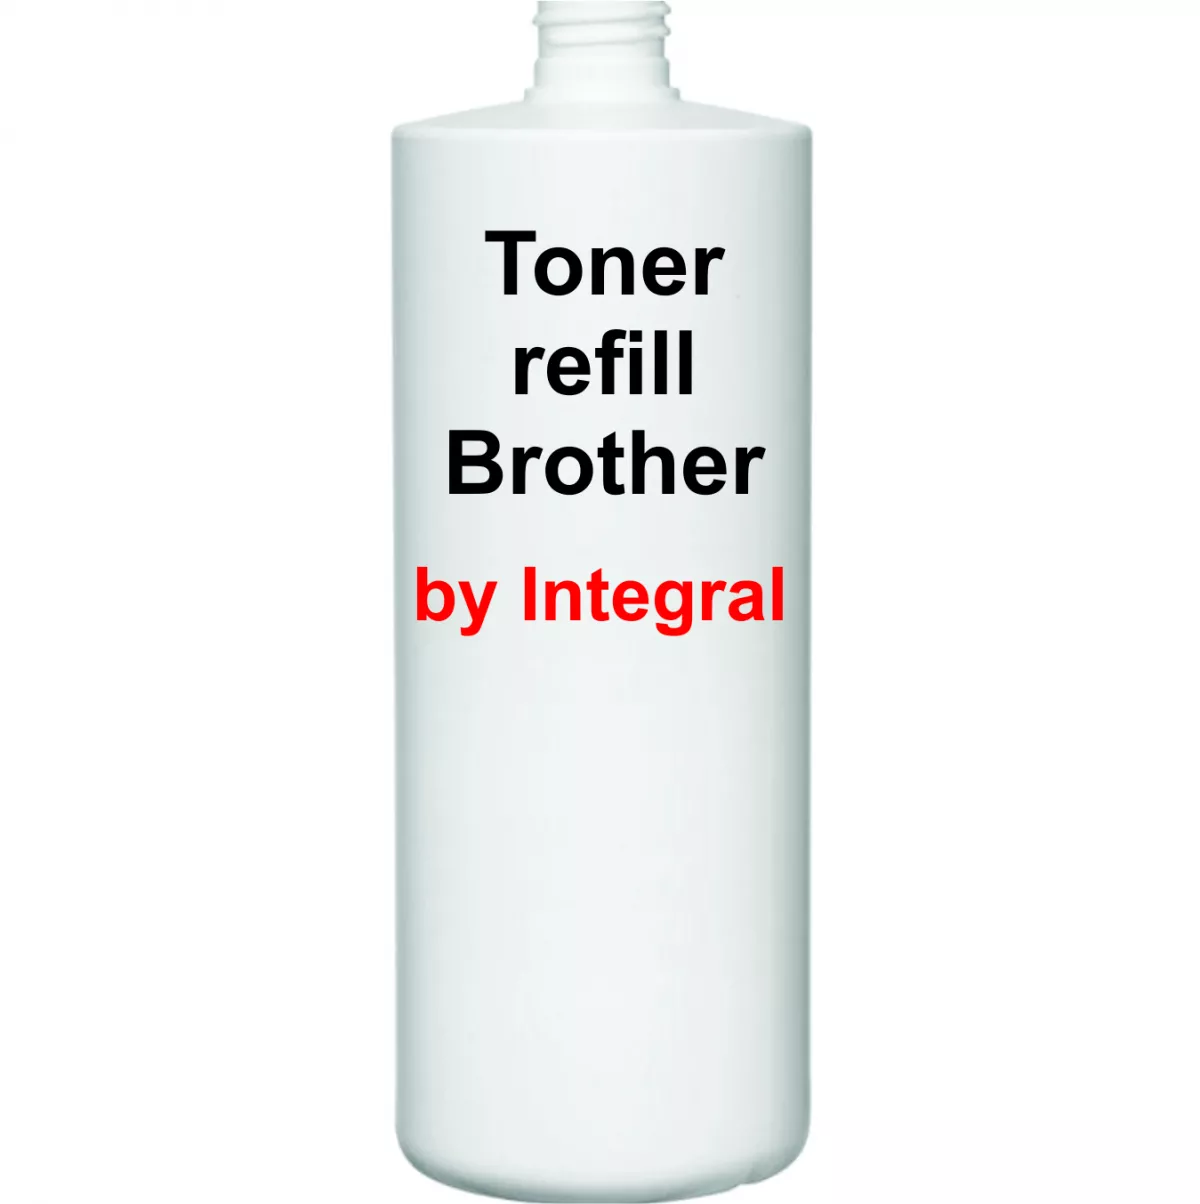 Toner refill cartus Brother TN2411 TN2421 1000g by Integral, [],erefill.ro